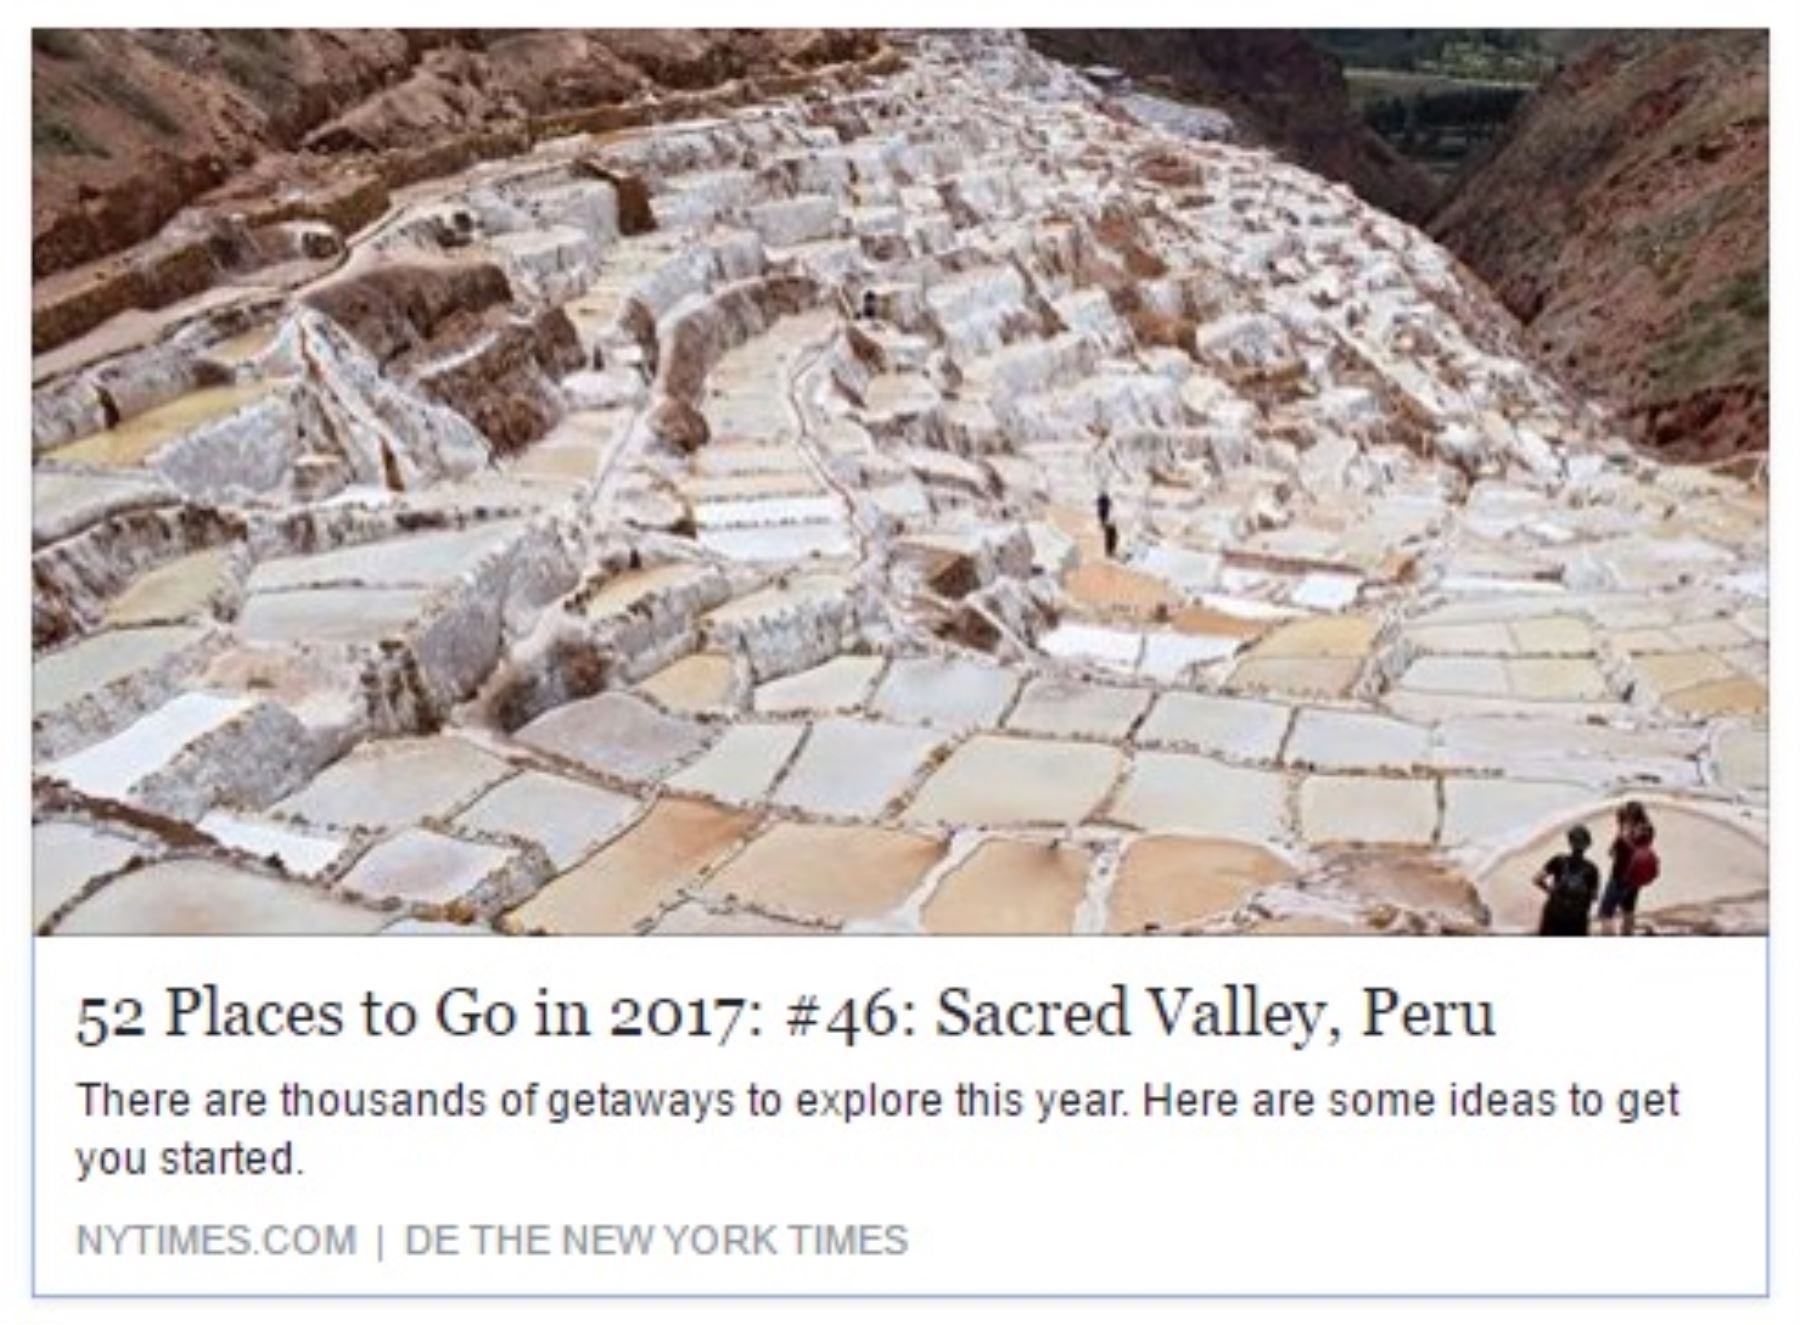 Las minas de sal de Maras, en el Valle Sagrado, provincia de Urubamba, región Cusco. Foto: Danielle Villasana for The New York Times